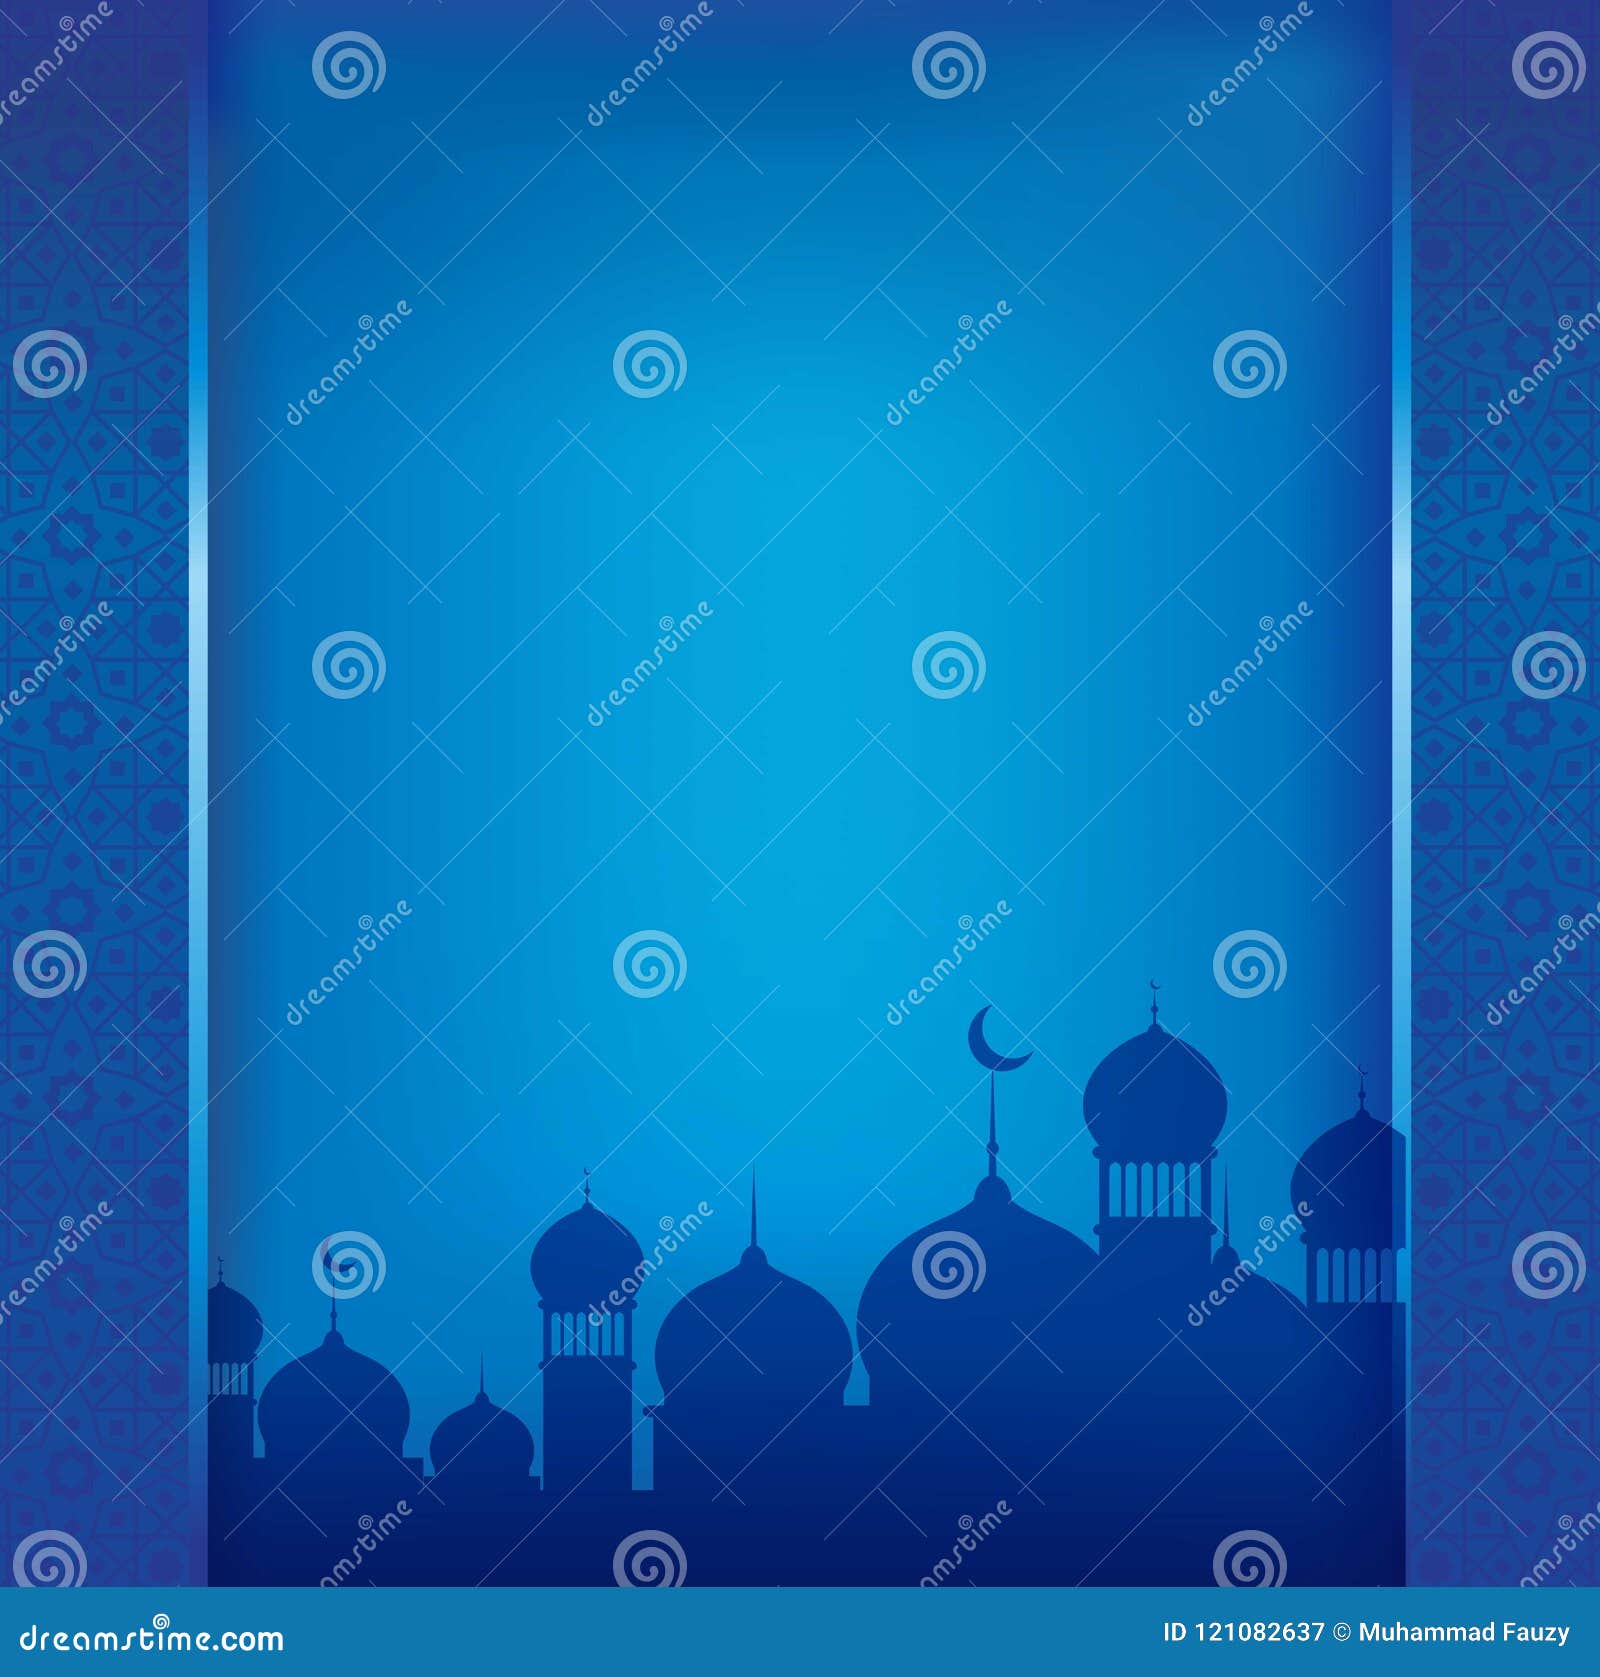 Islamic wallpaper Islamic hijab